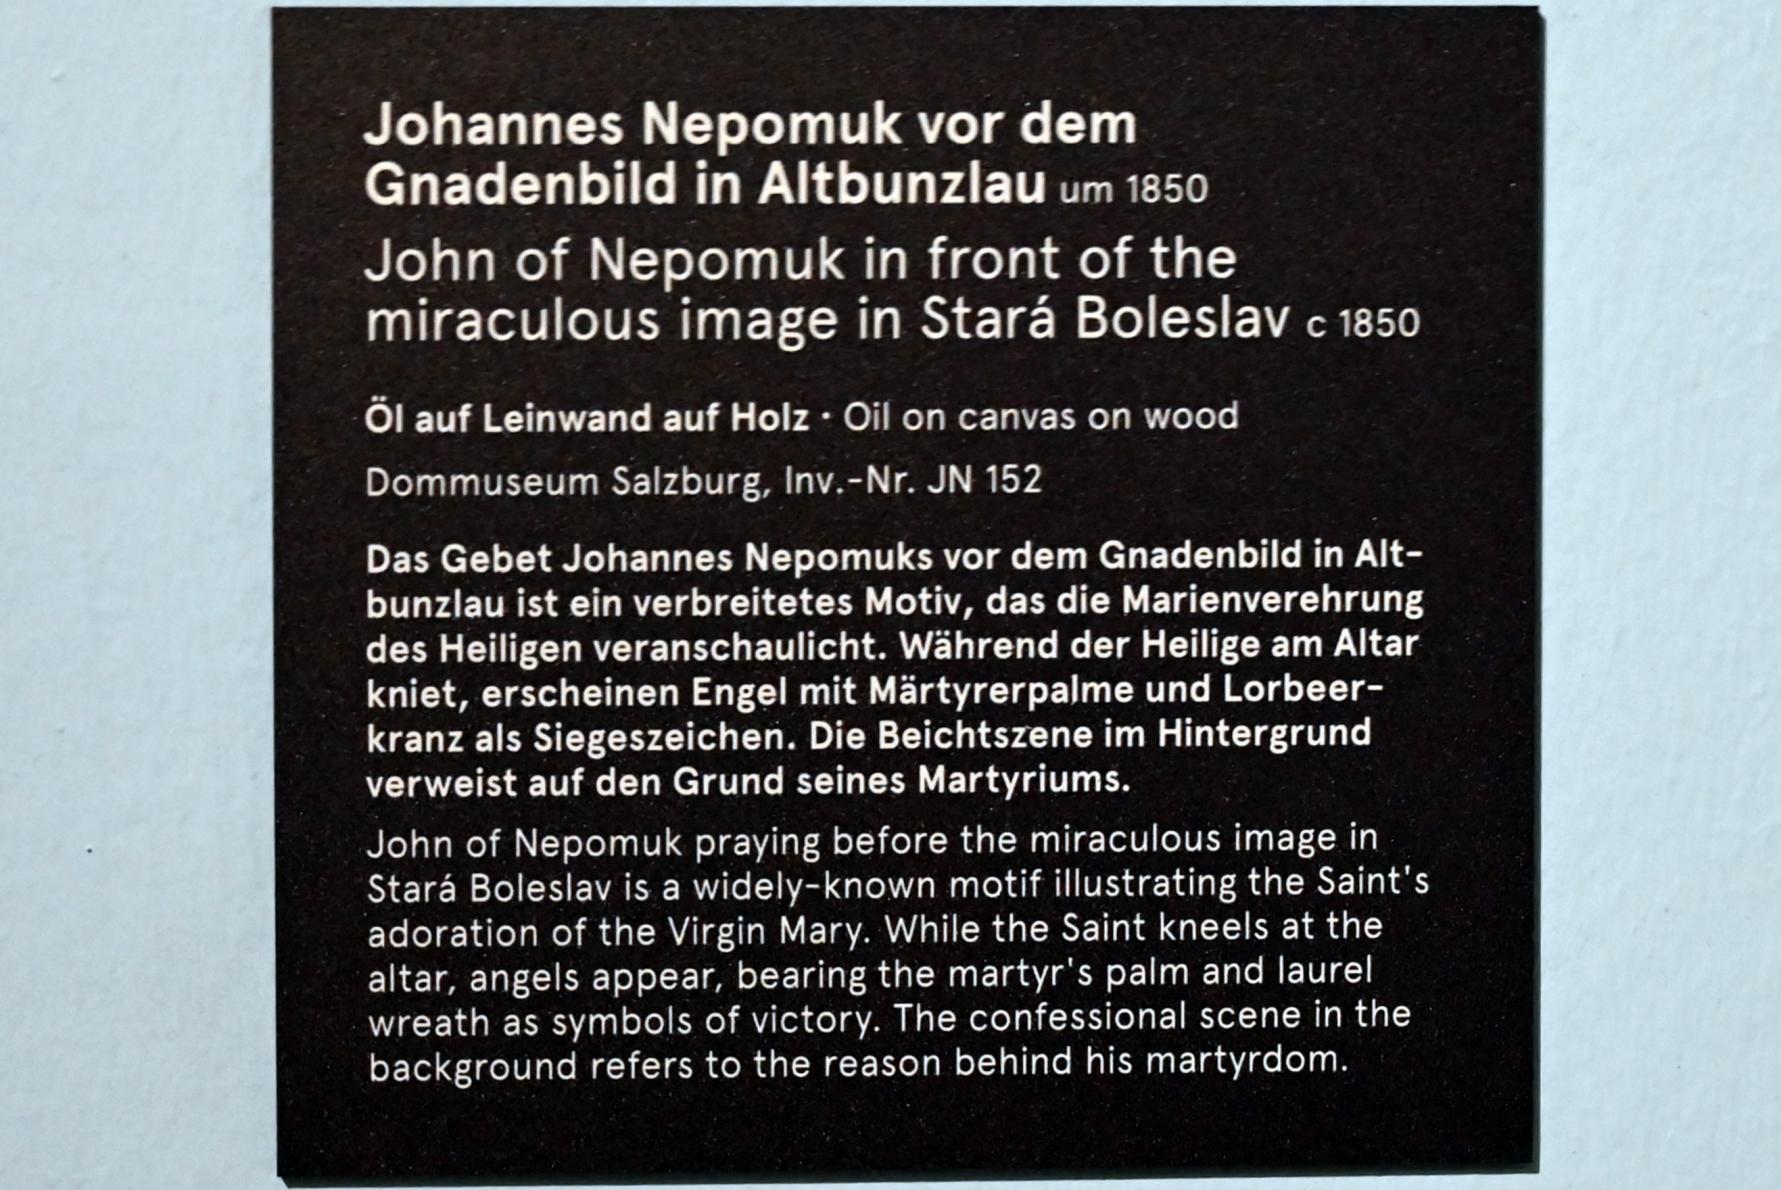 Johannes Nepomuk vor dem Gnadenbild in Altbunzlau, Salzburg, Dommuseum Salzburg, um 1850, Bild 2/2